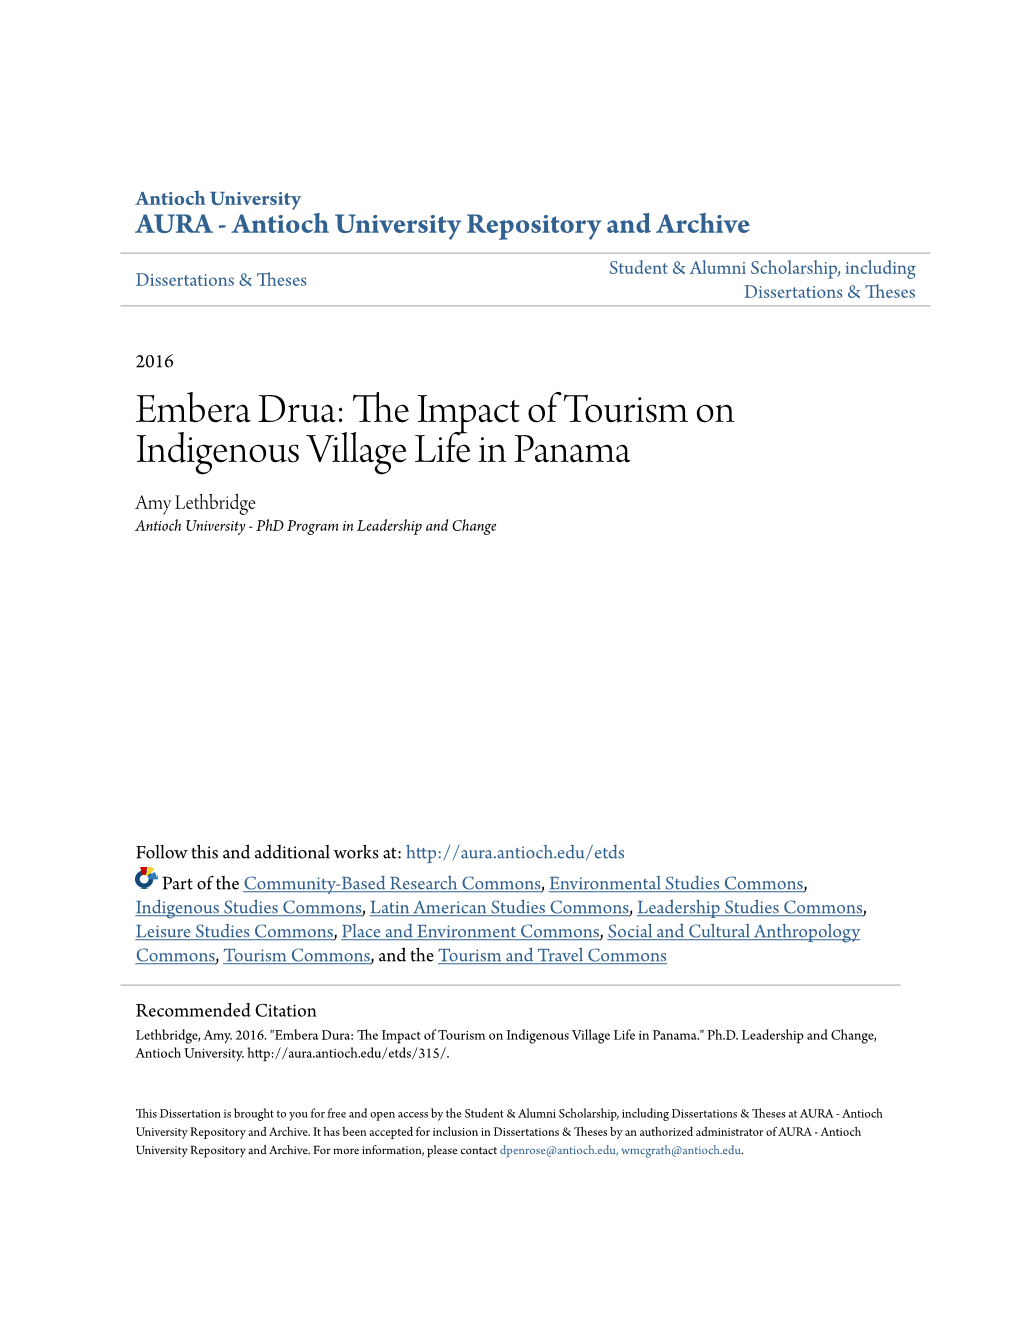 Embera Drua: the Impact of Tourism on Indigenous Village Life in Panama